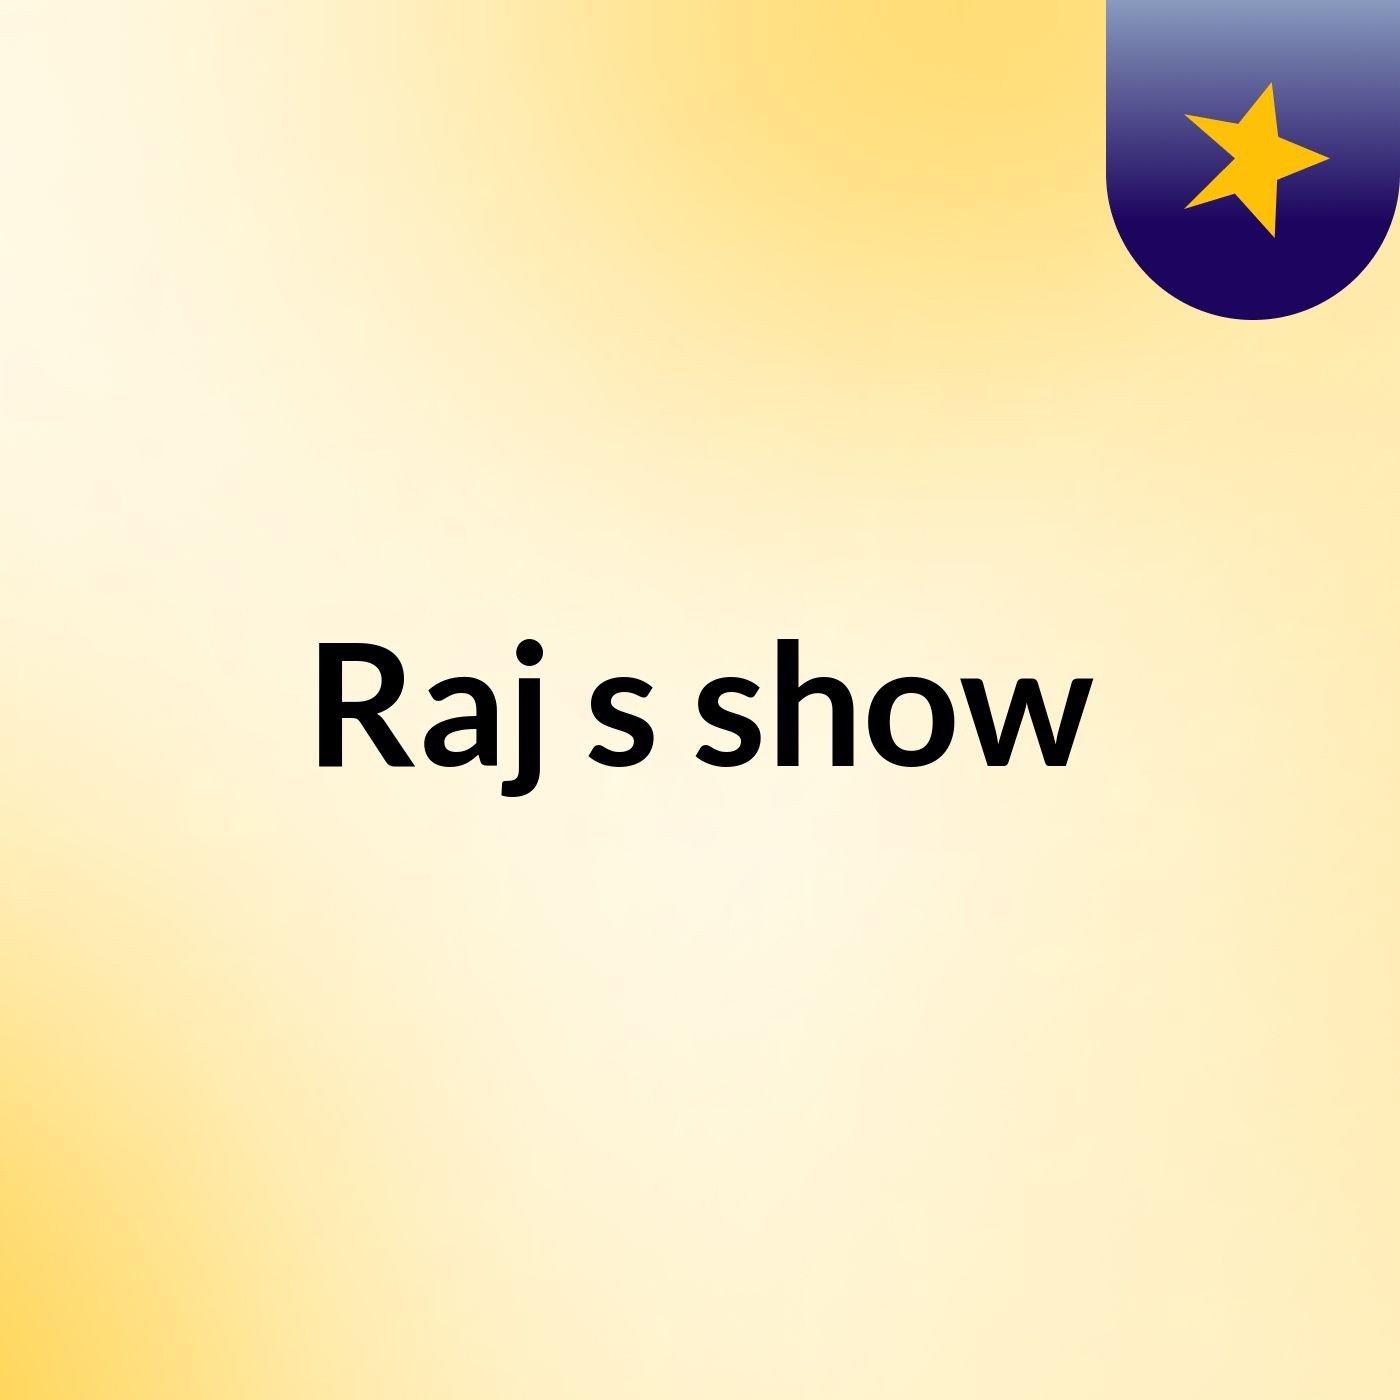 Raj's show